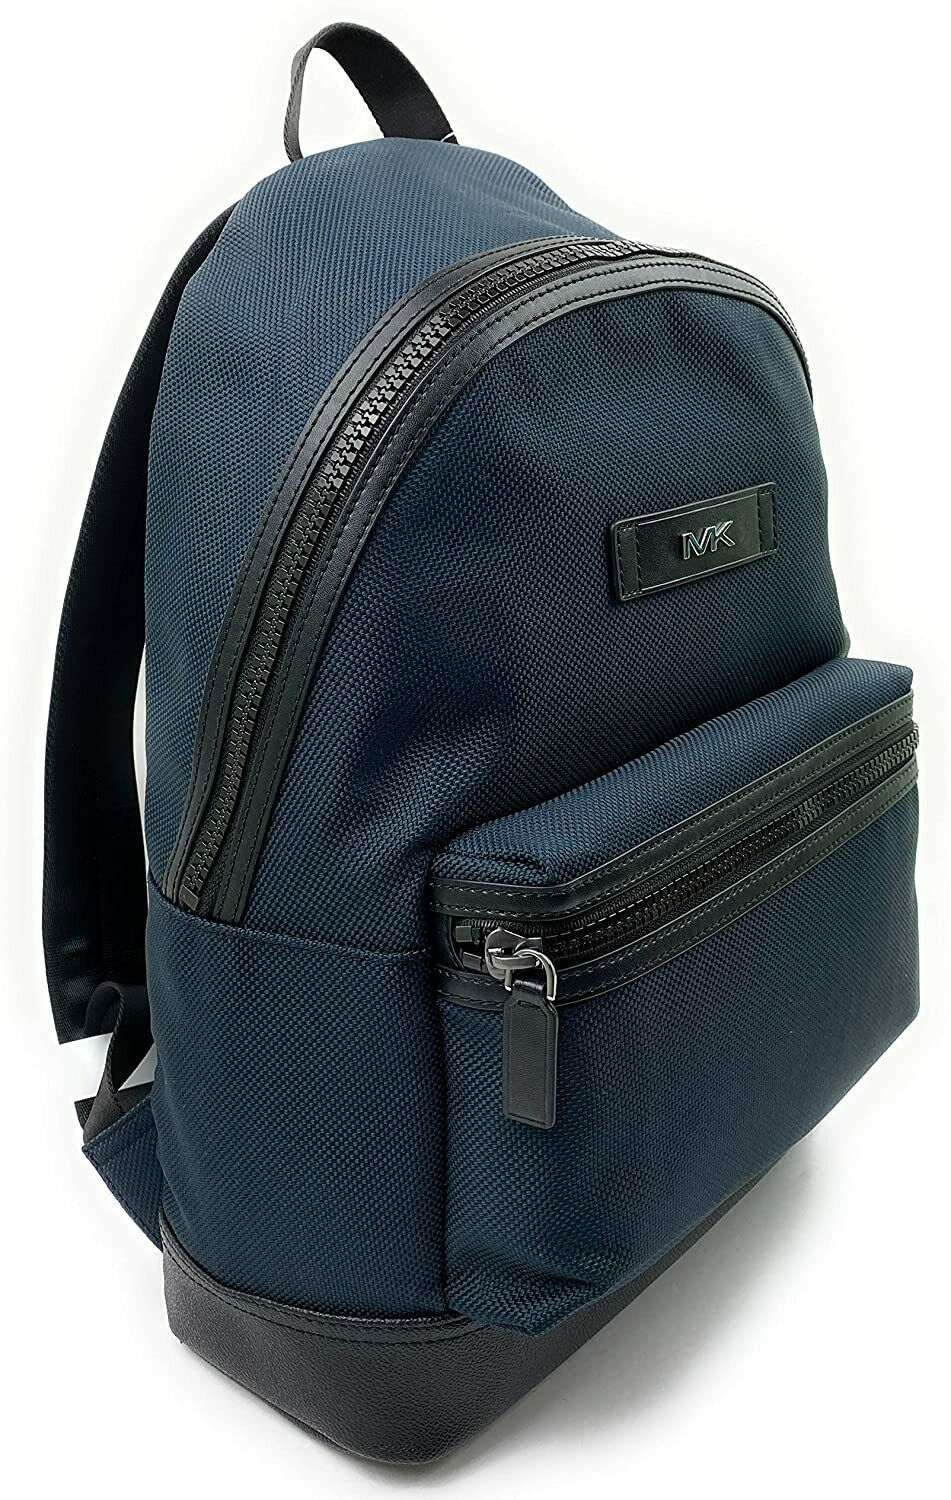 Michael Kors Kent Sport Navy Blue Nylon Large Backpack NWT 37F9LKSB2C $398 FS